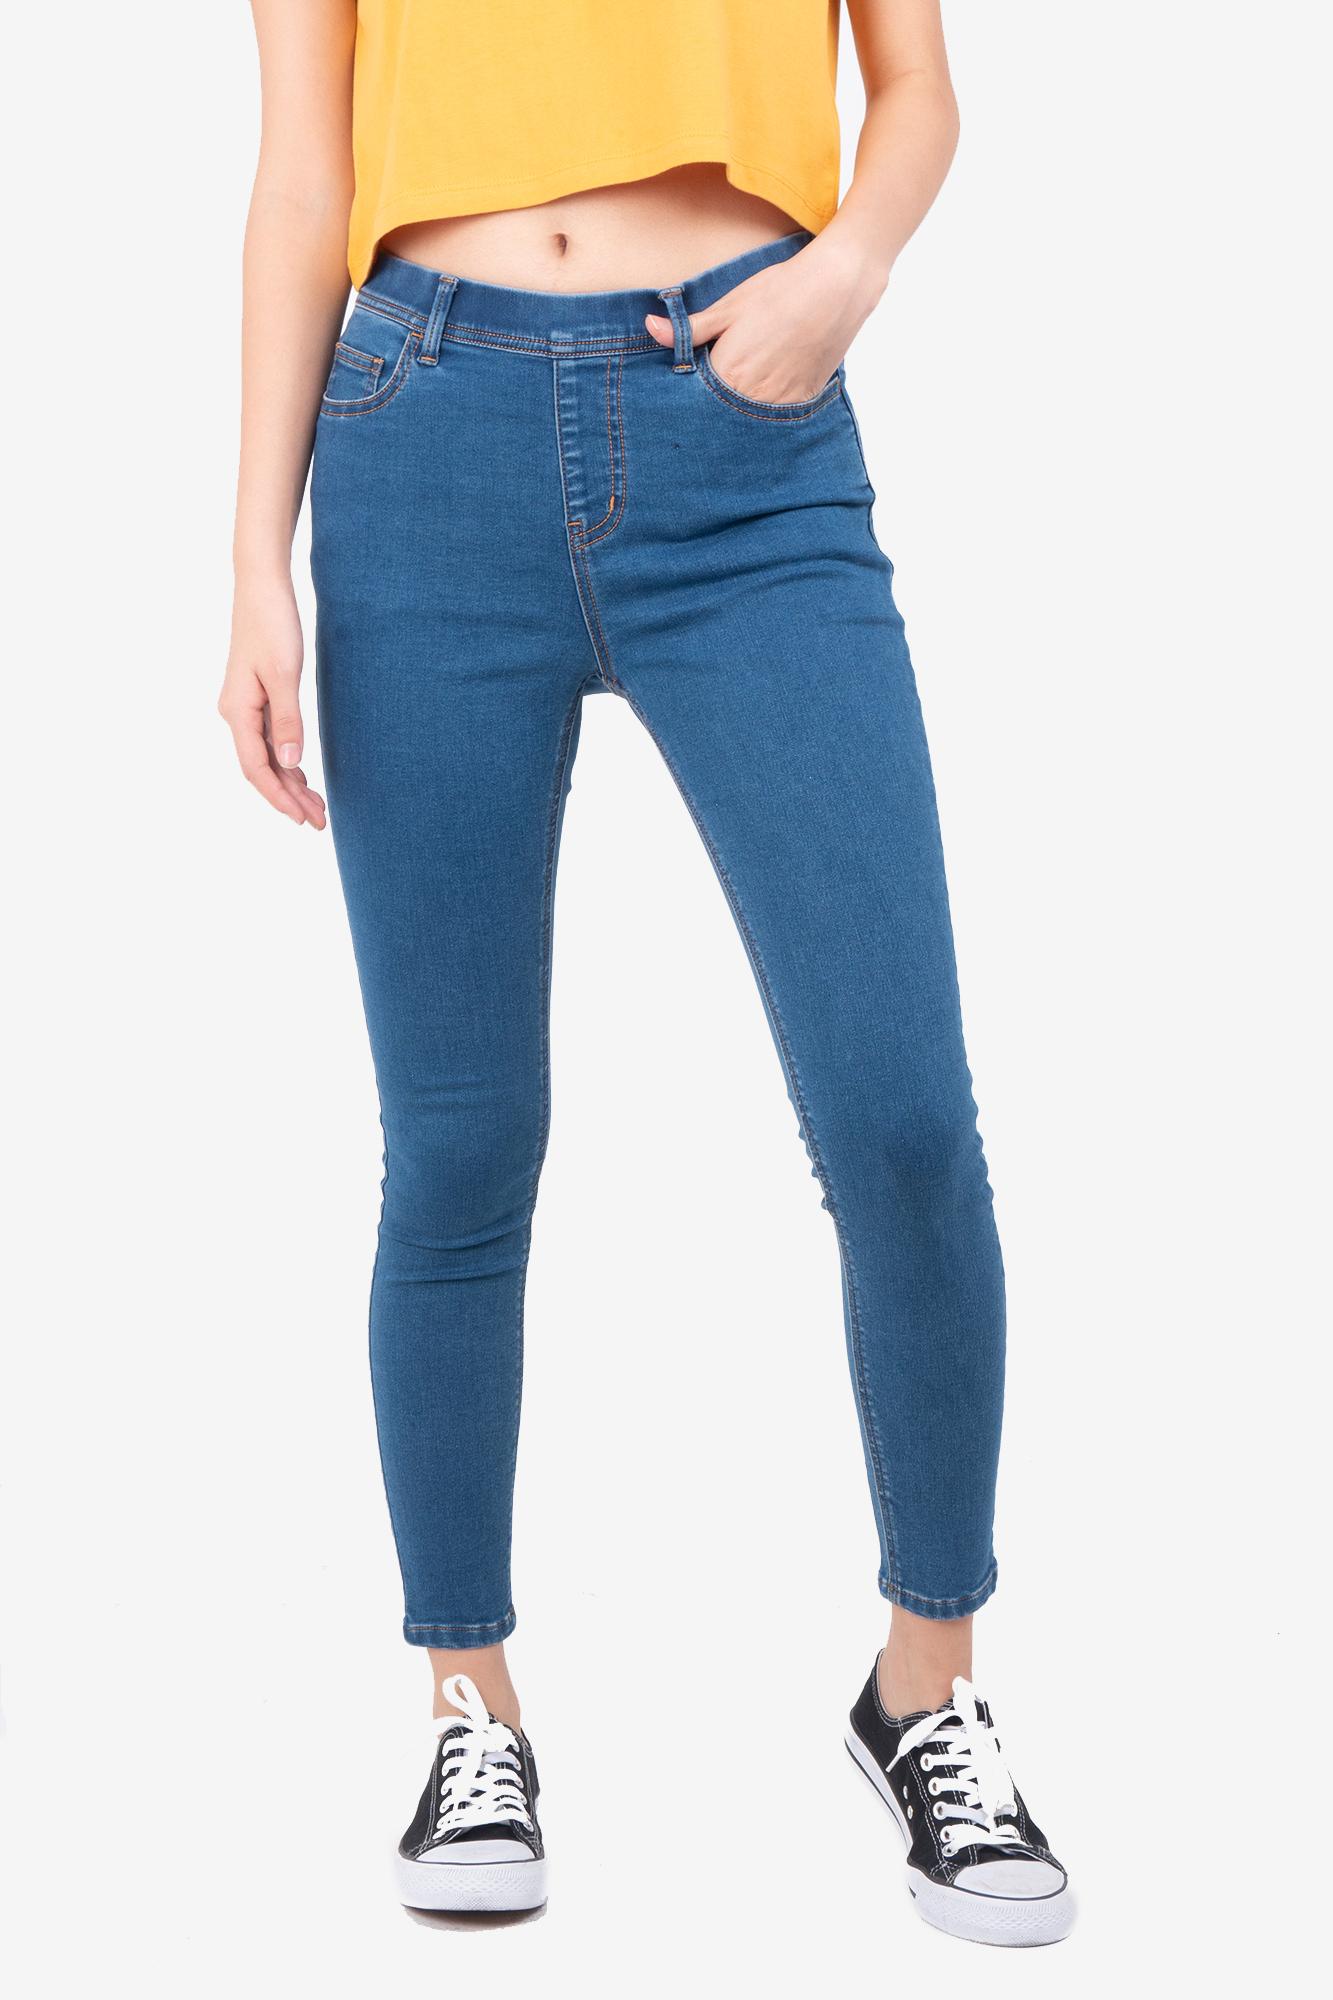 penshoppe jeans price